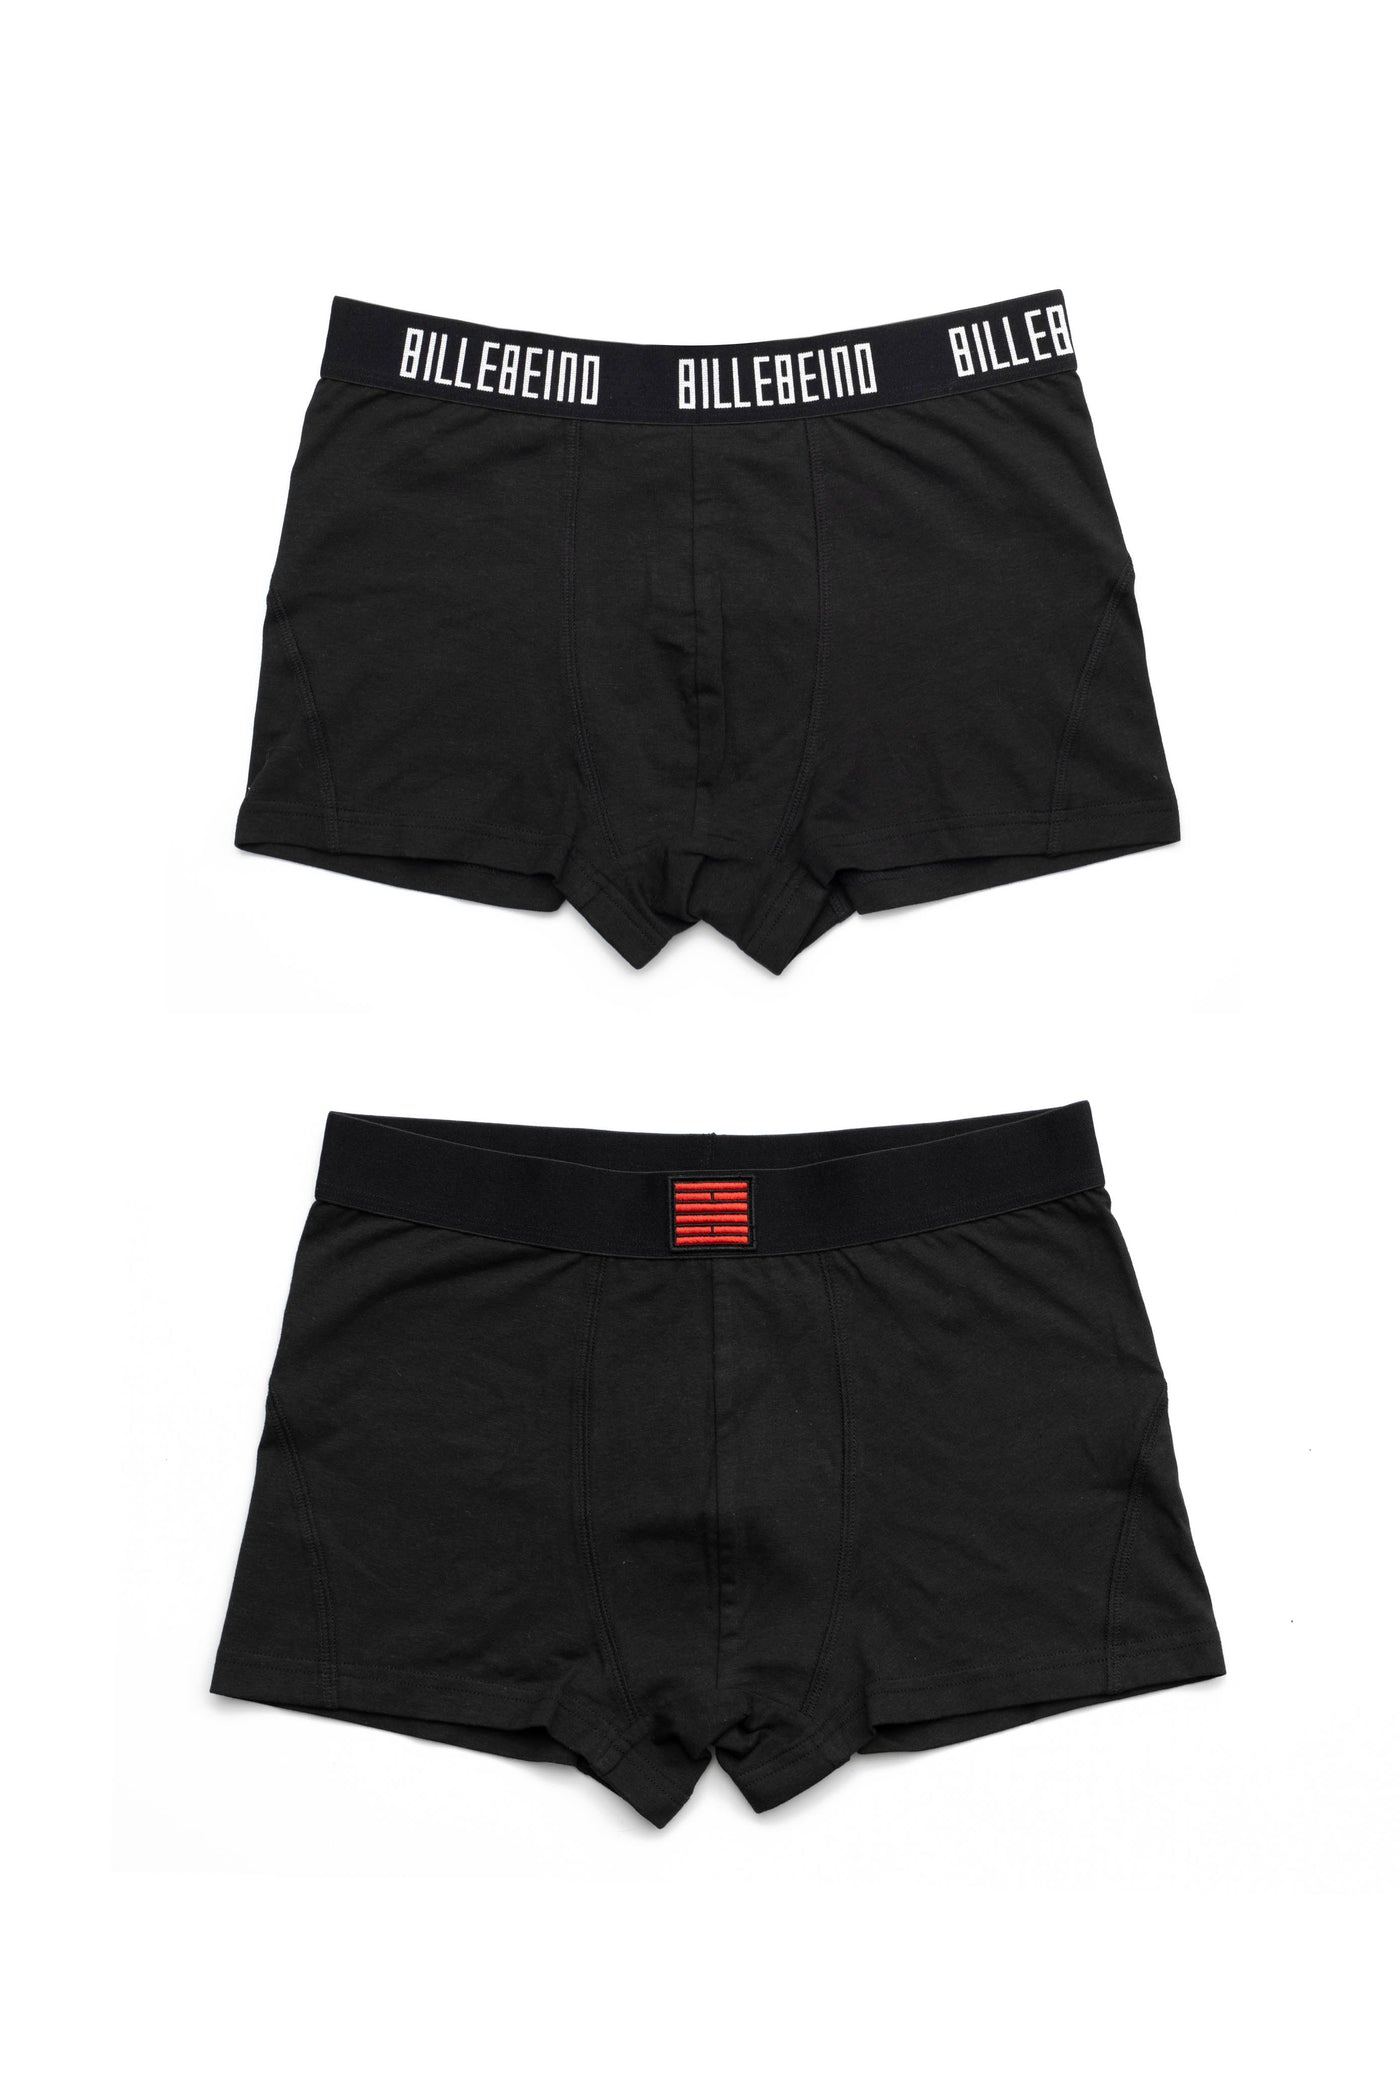 Billebeino boxers